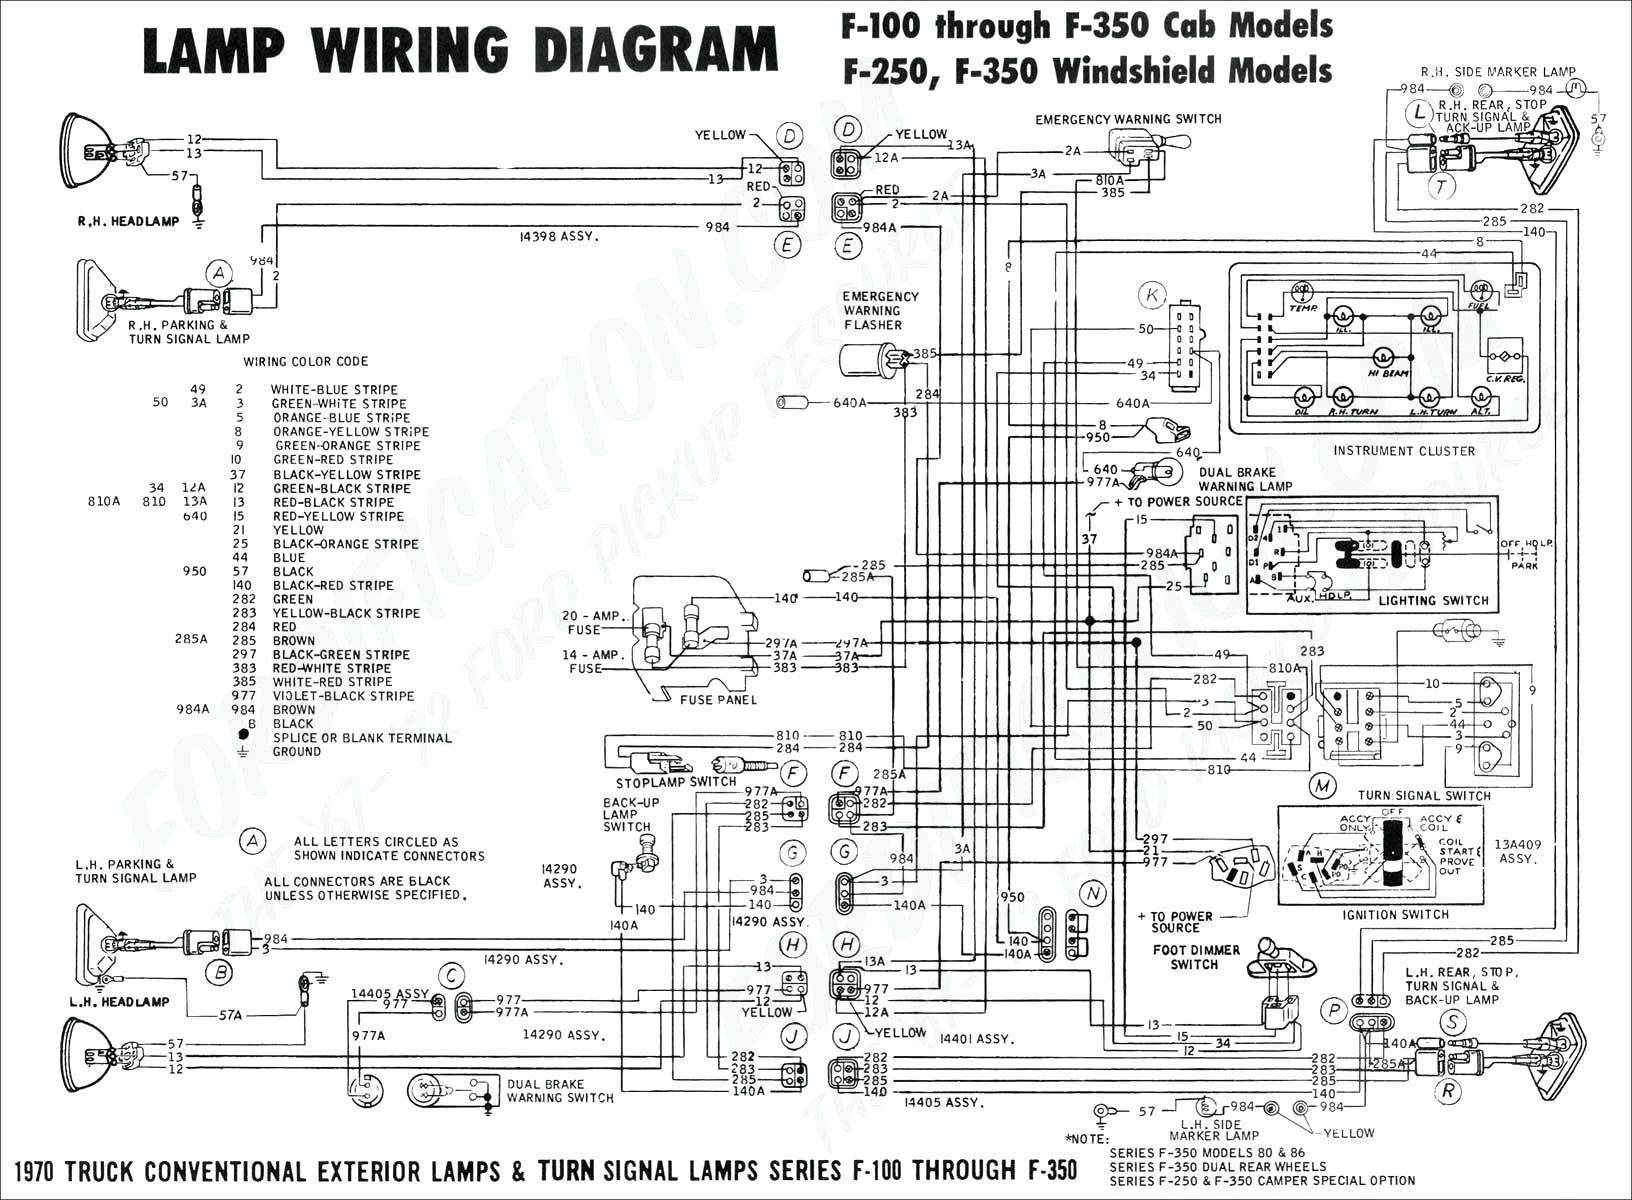 Heat Pump Thermostat Wiring Diagram A Goodman Thermostat Wiring Diagram Heat Pump Phk 0 36 I